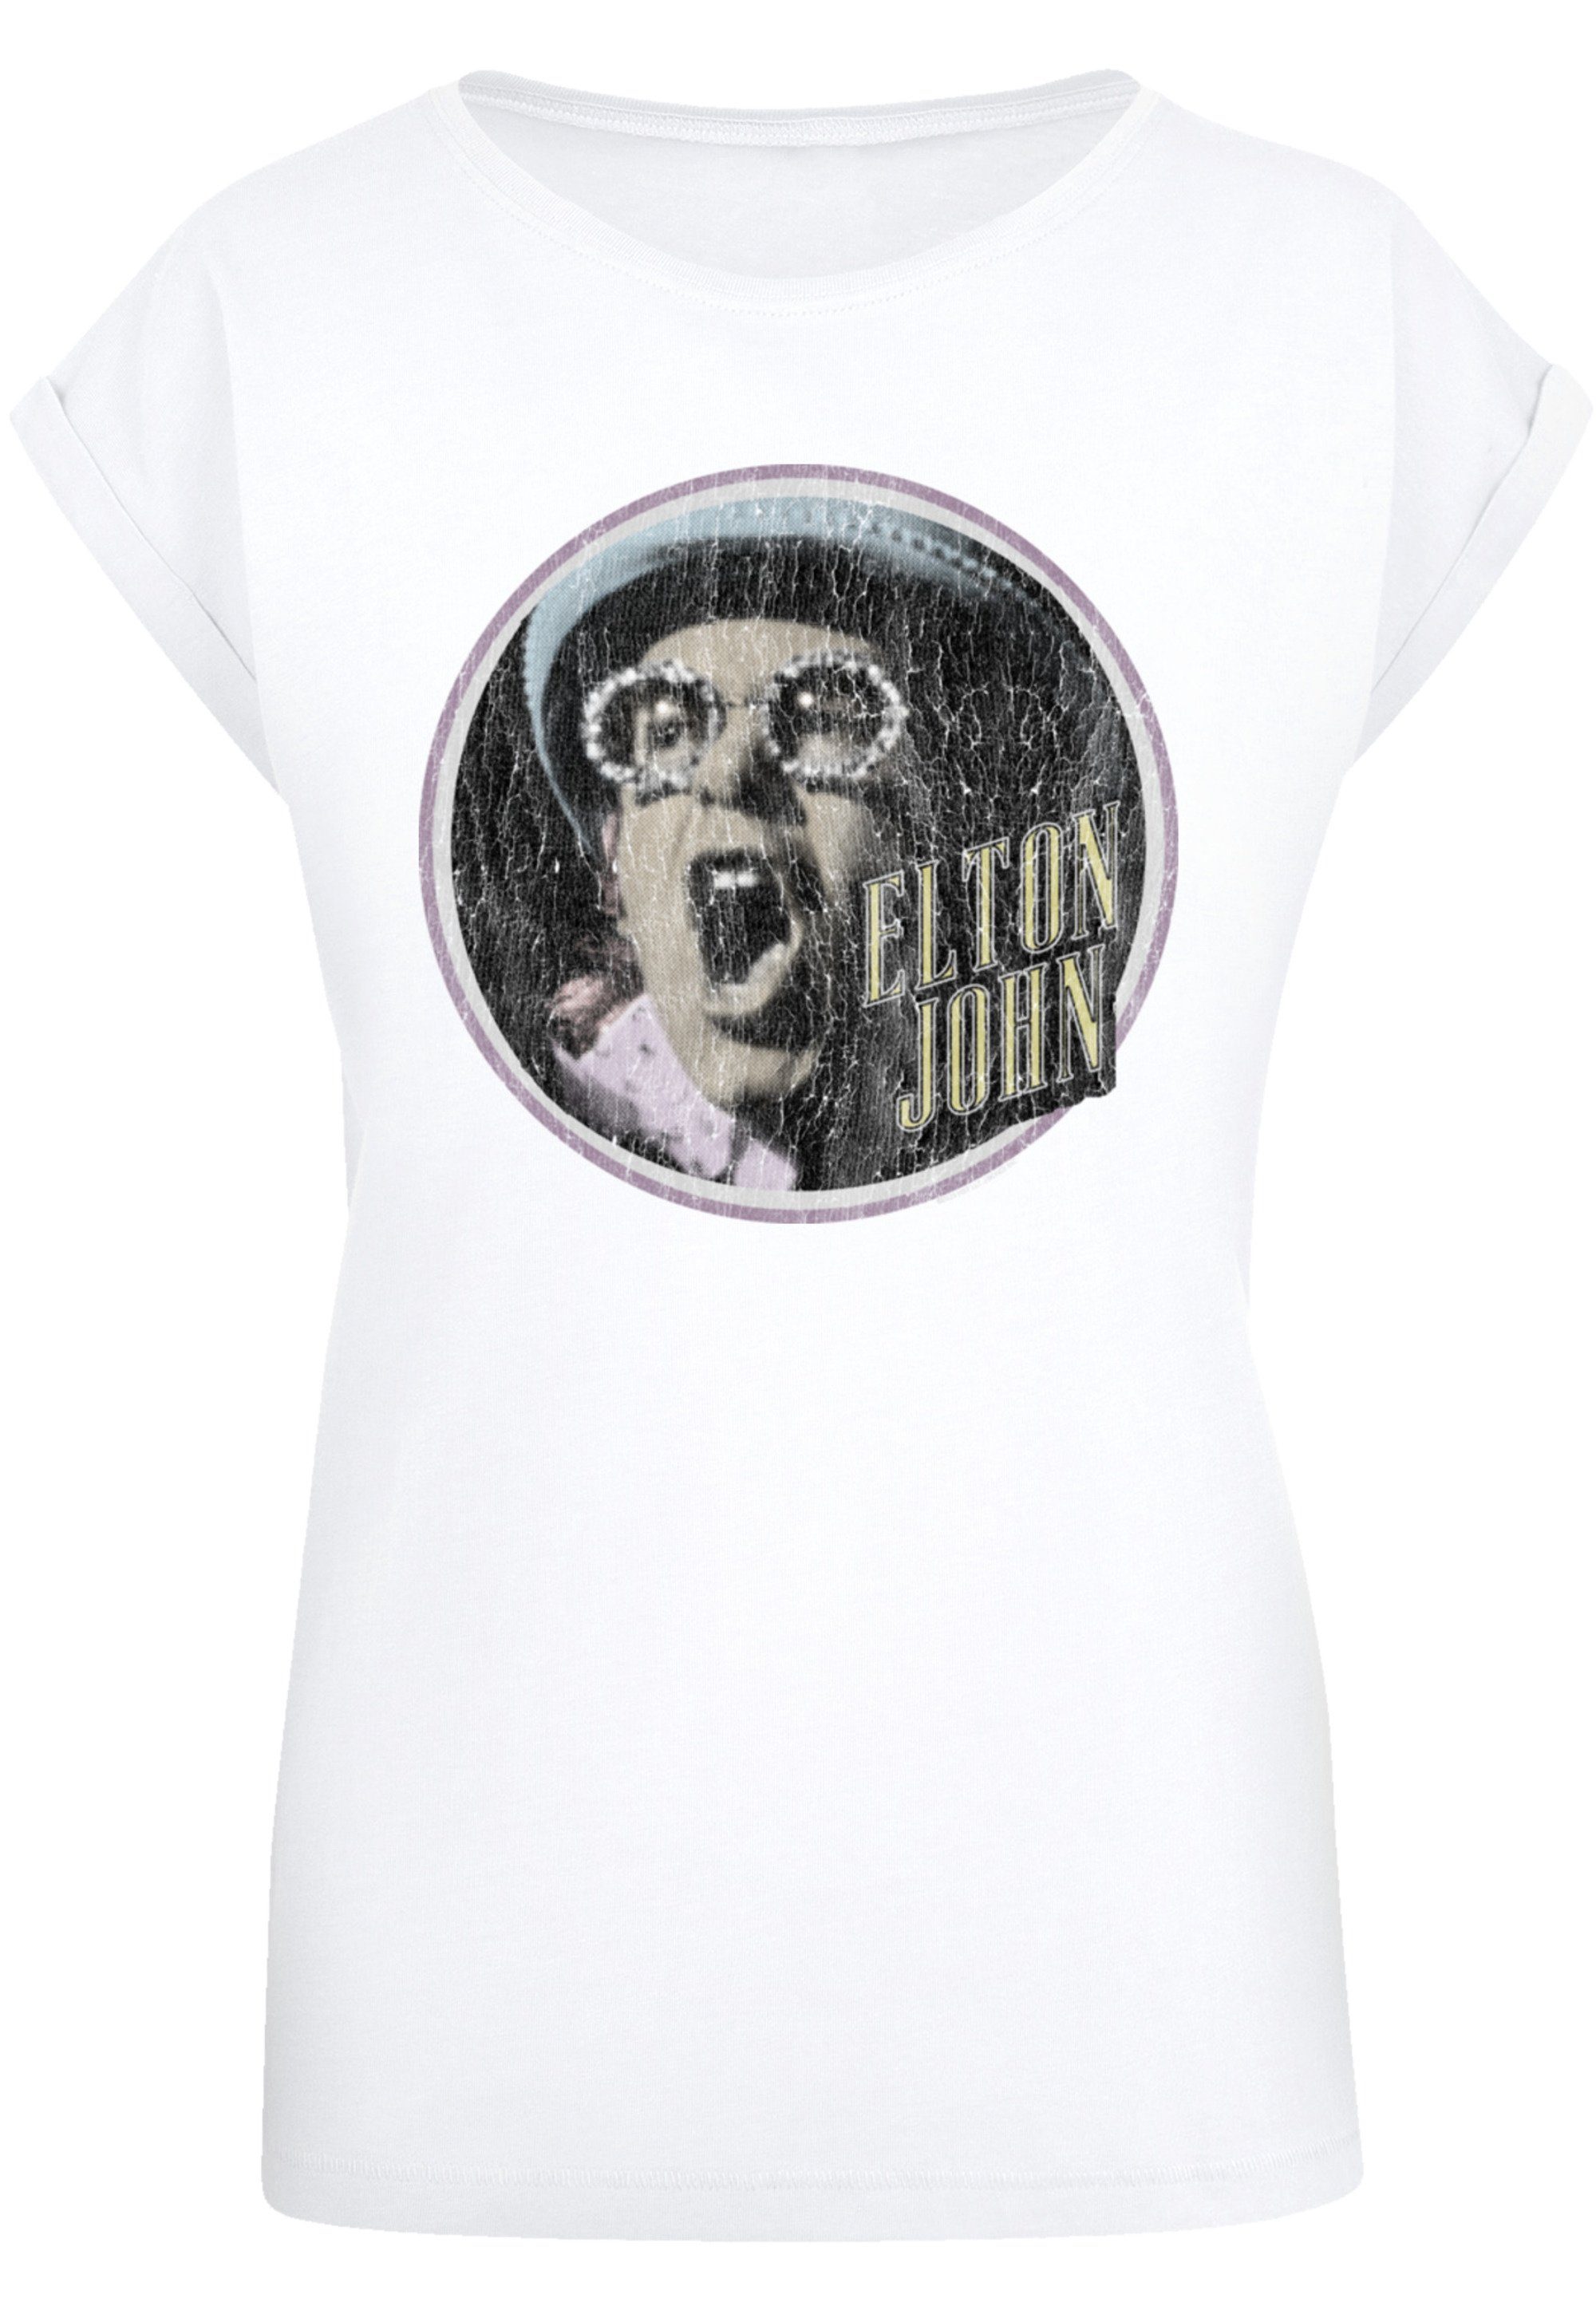 F4NT4STIC T-Shirt Elton John Premium Qualität Circle weiß Vintage